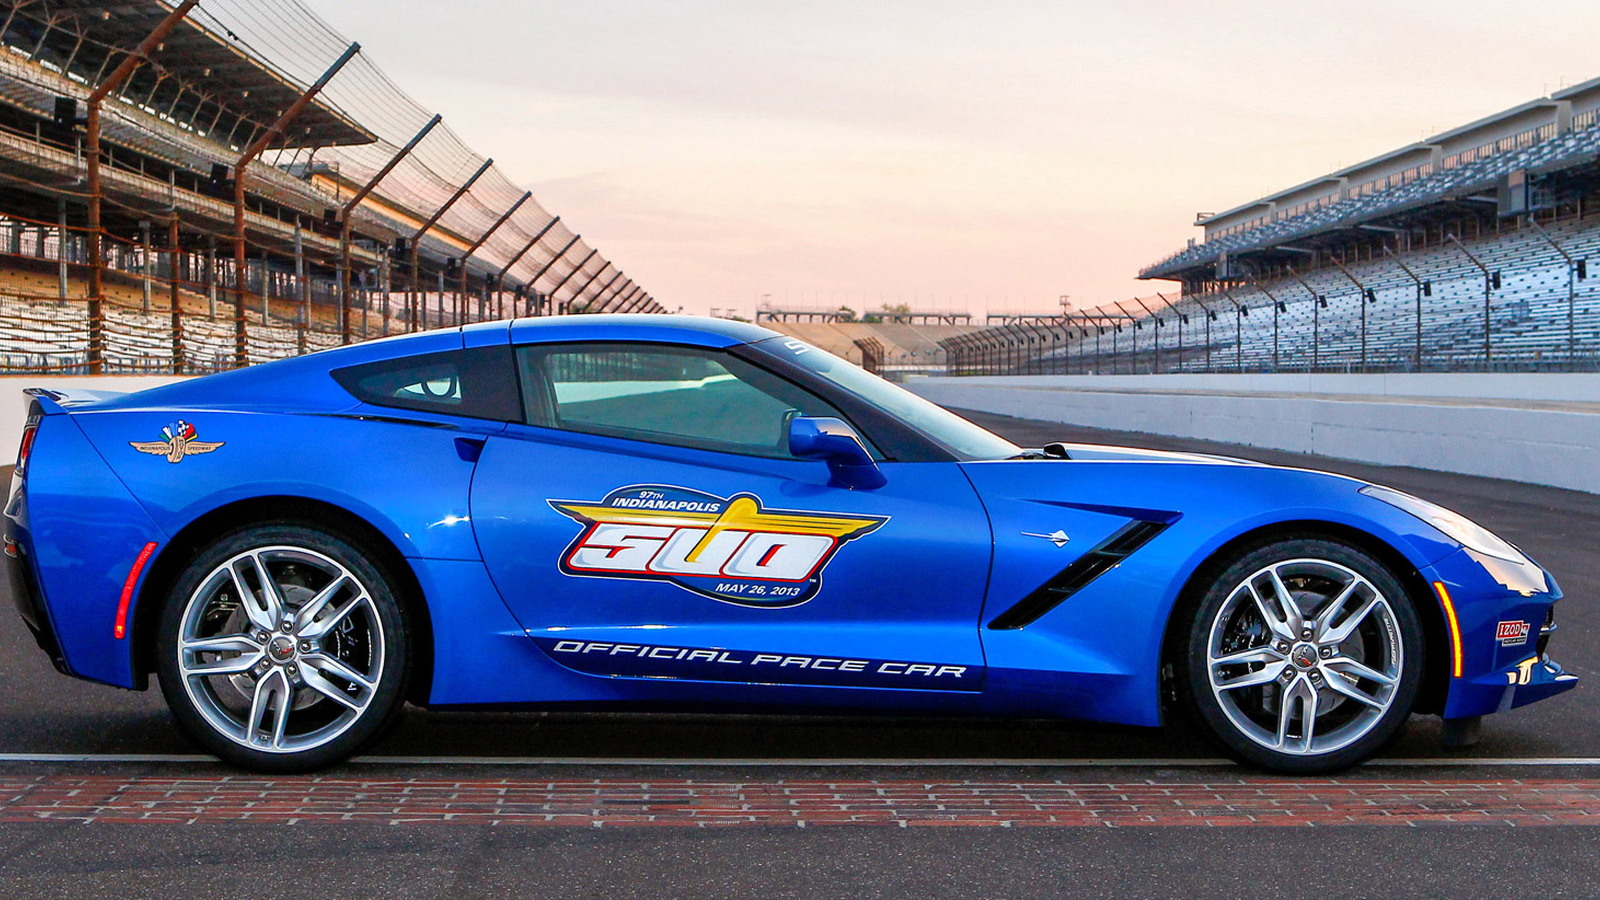 2014 Chevrolet Corvette Stingray - 2013 Indianapolis 500 Pace Car